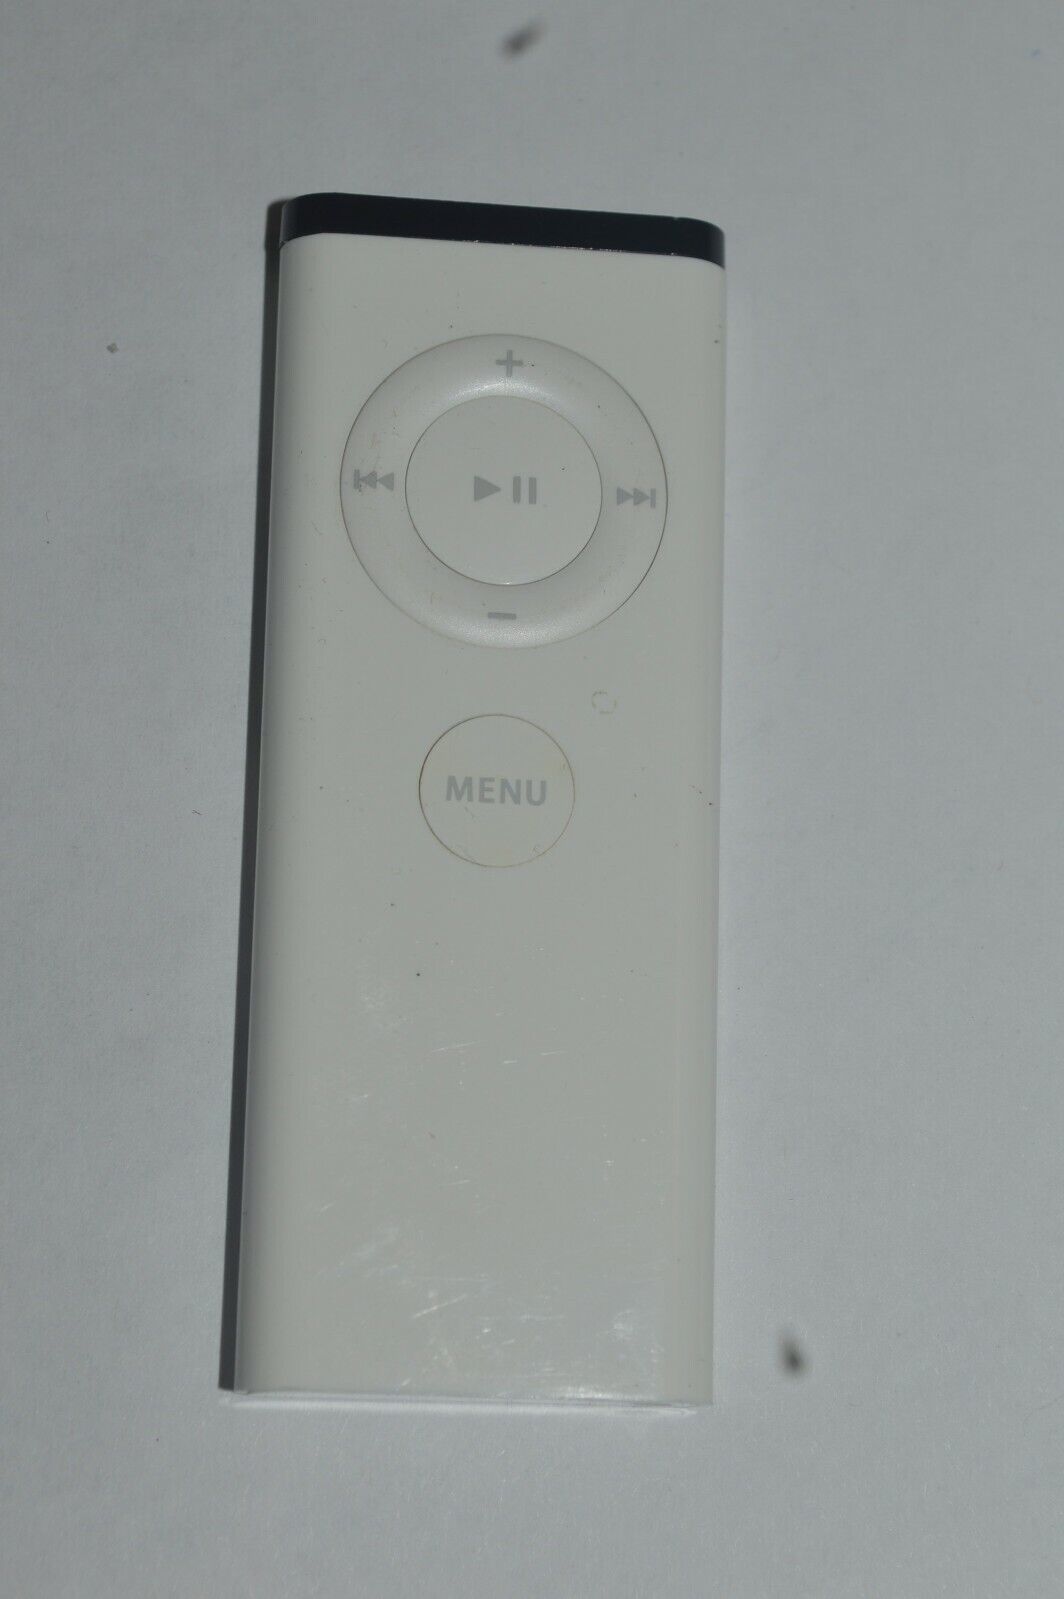 Apple A1294 Remote Control EMC 2086 Original Apple Remote Mint Conditions 